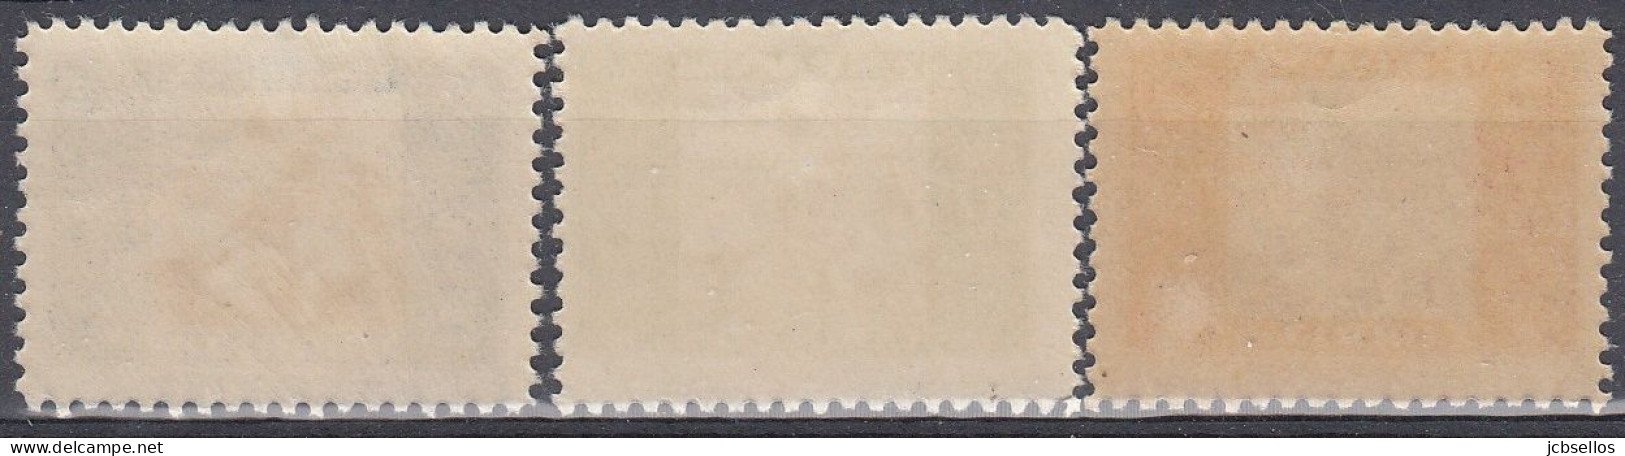 ESPAÑA BENEFICENCIA 1937 Nº 9/11 NUEVO SIN CHARNELA - Wohlfahrtsmarken